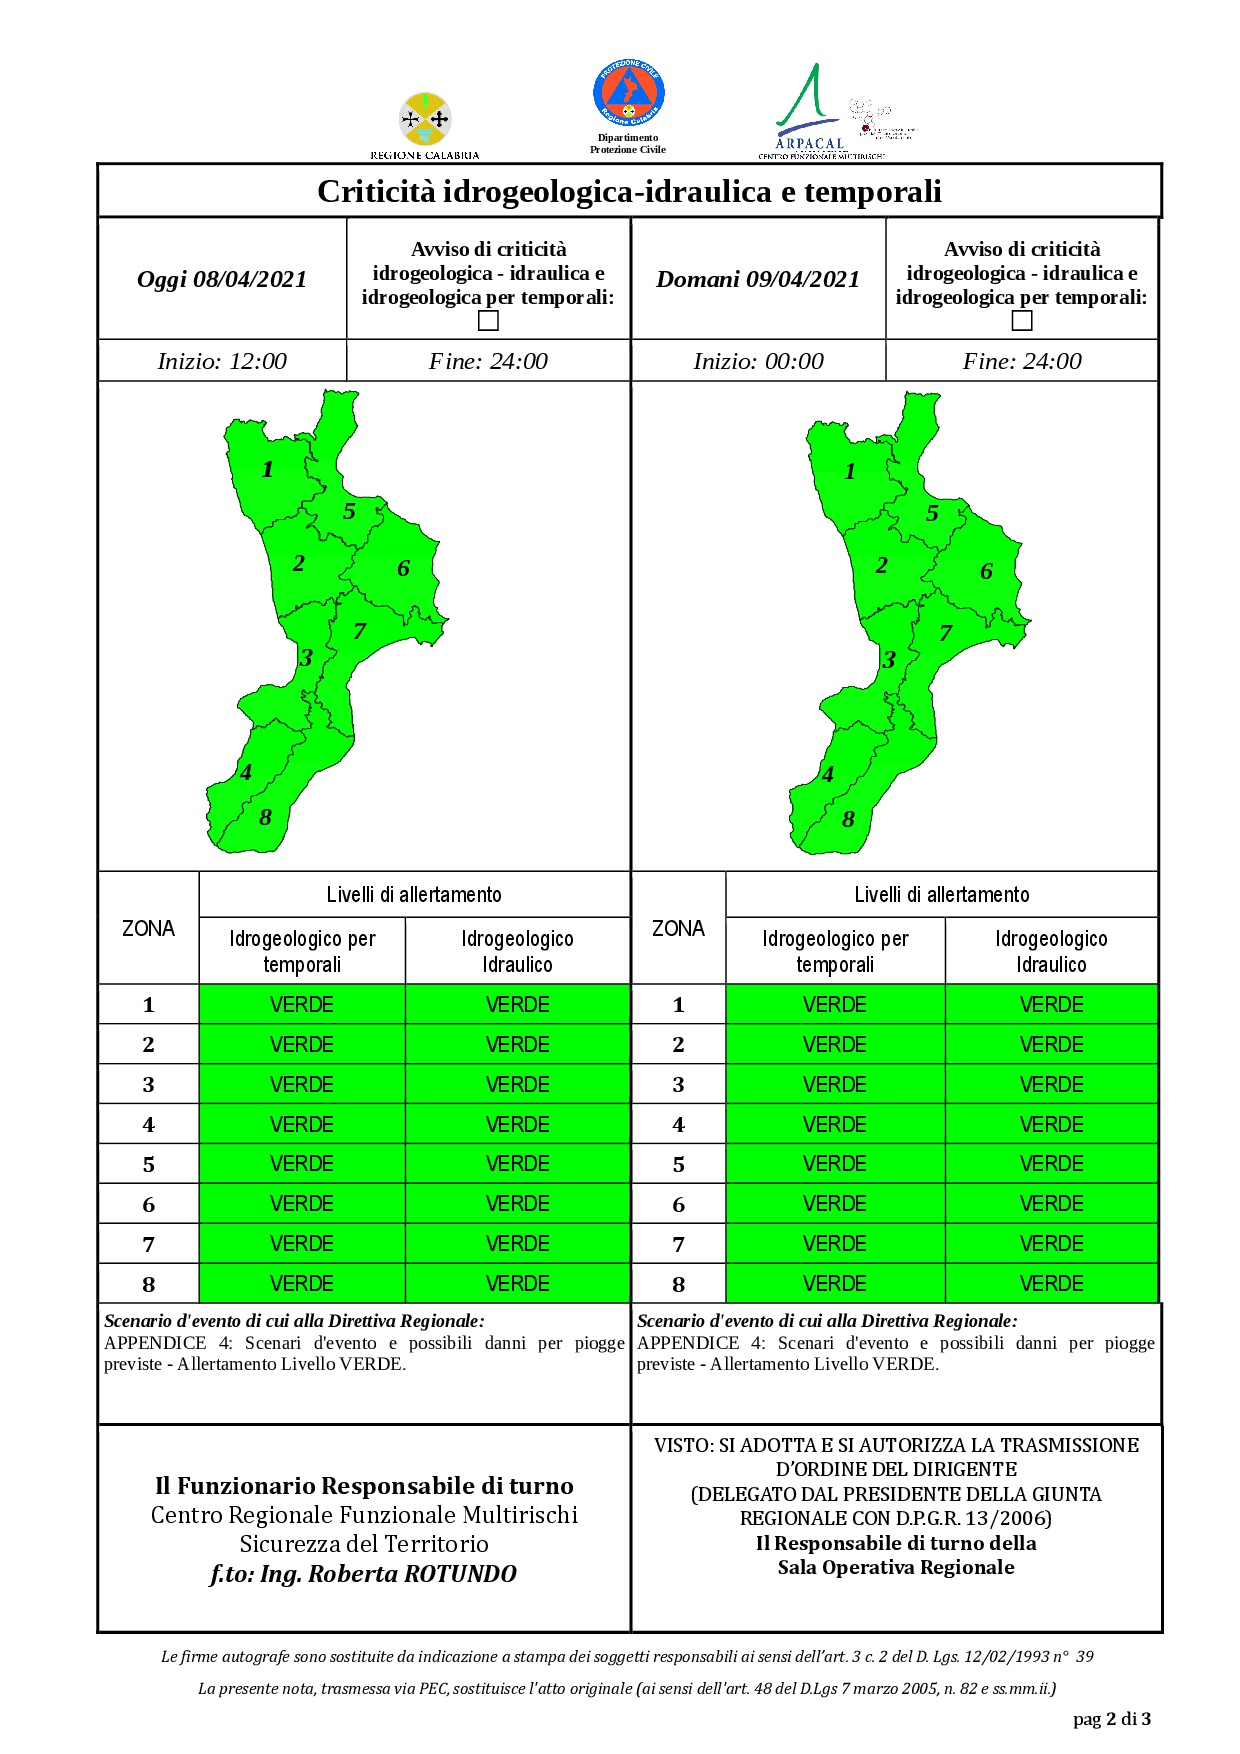 Criticità idrogeologica-idraulica e temporali in Calabria 08-04-2021